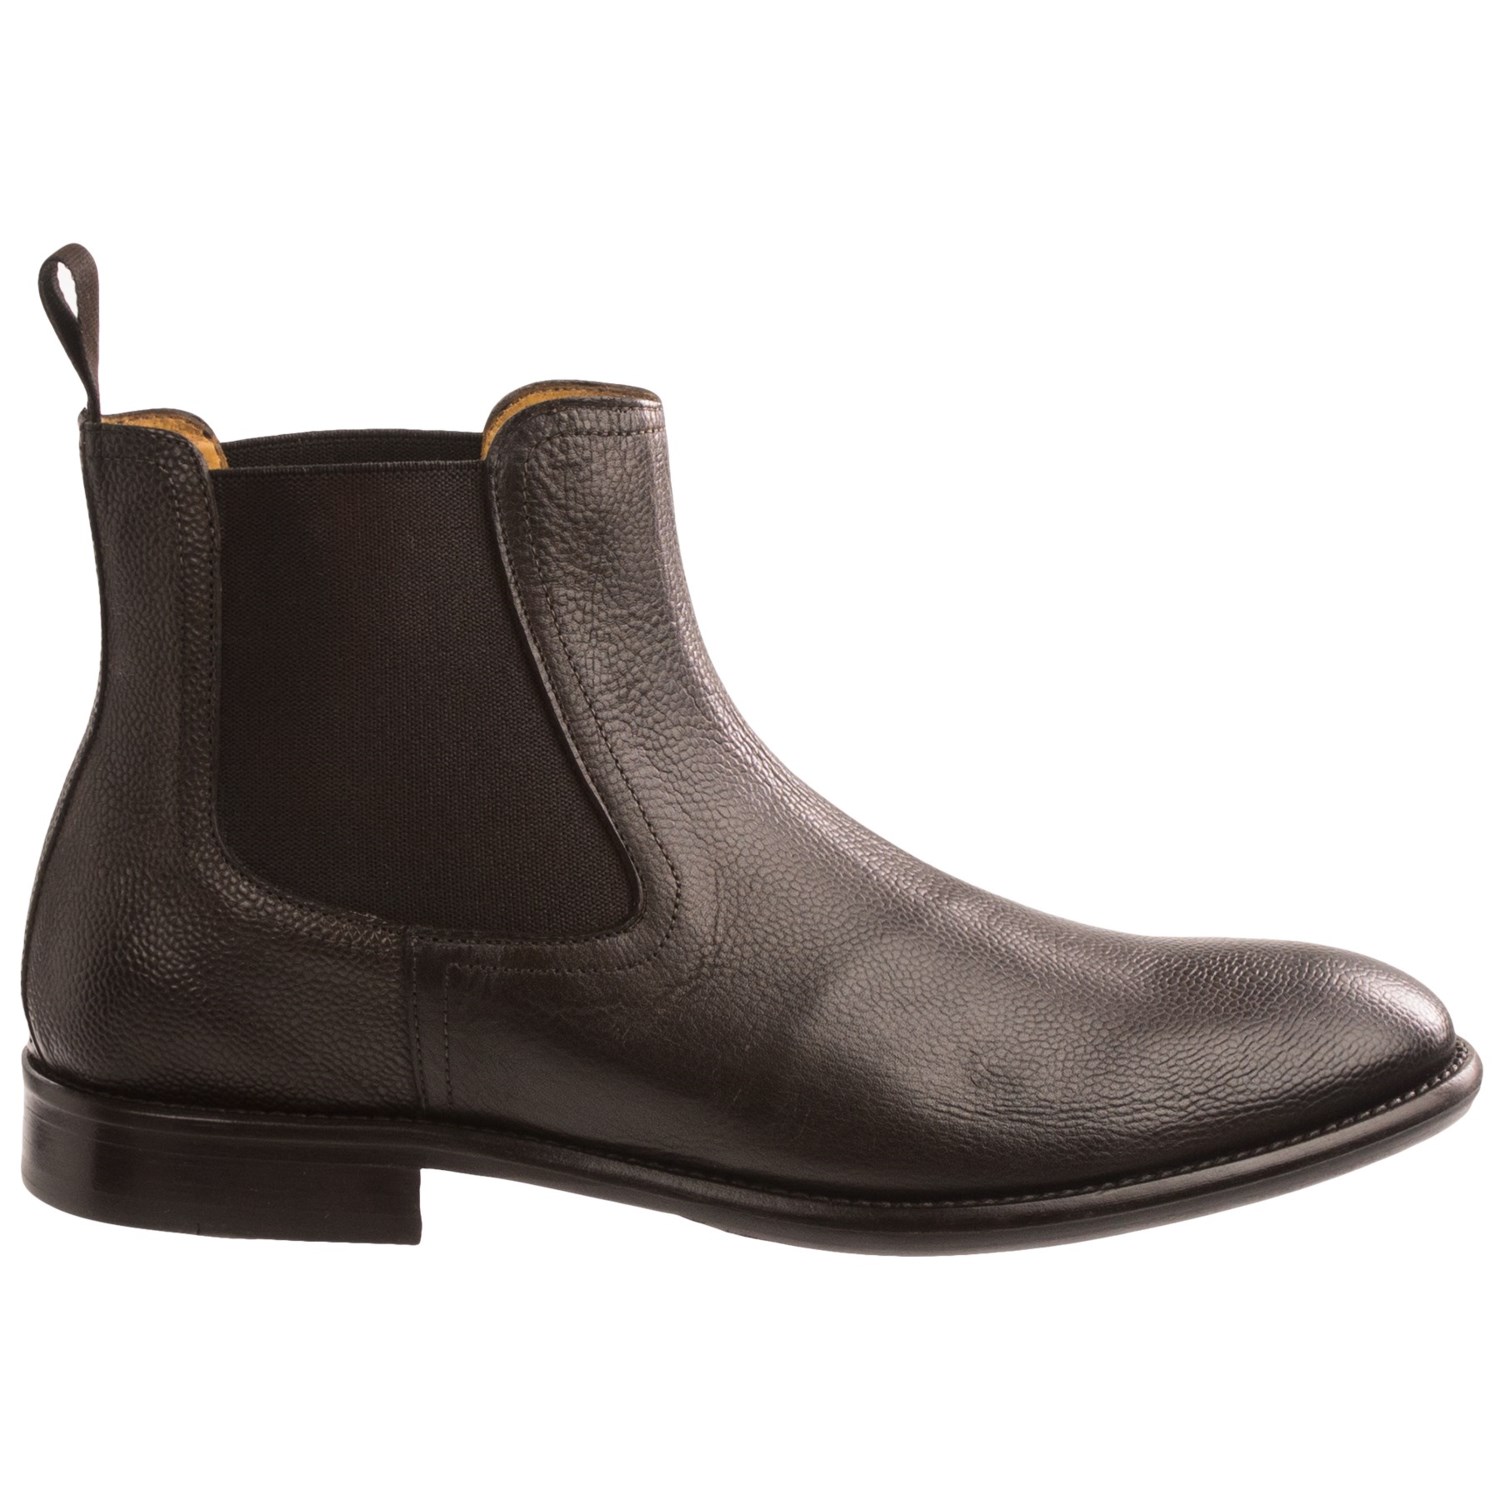 Gordon Rush Empire Dress Boots (For Men) 7618J - Save 37%